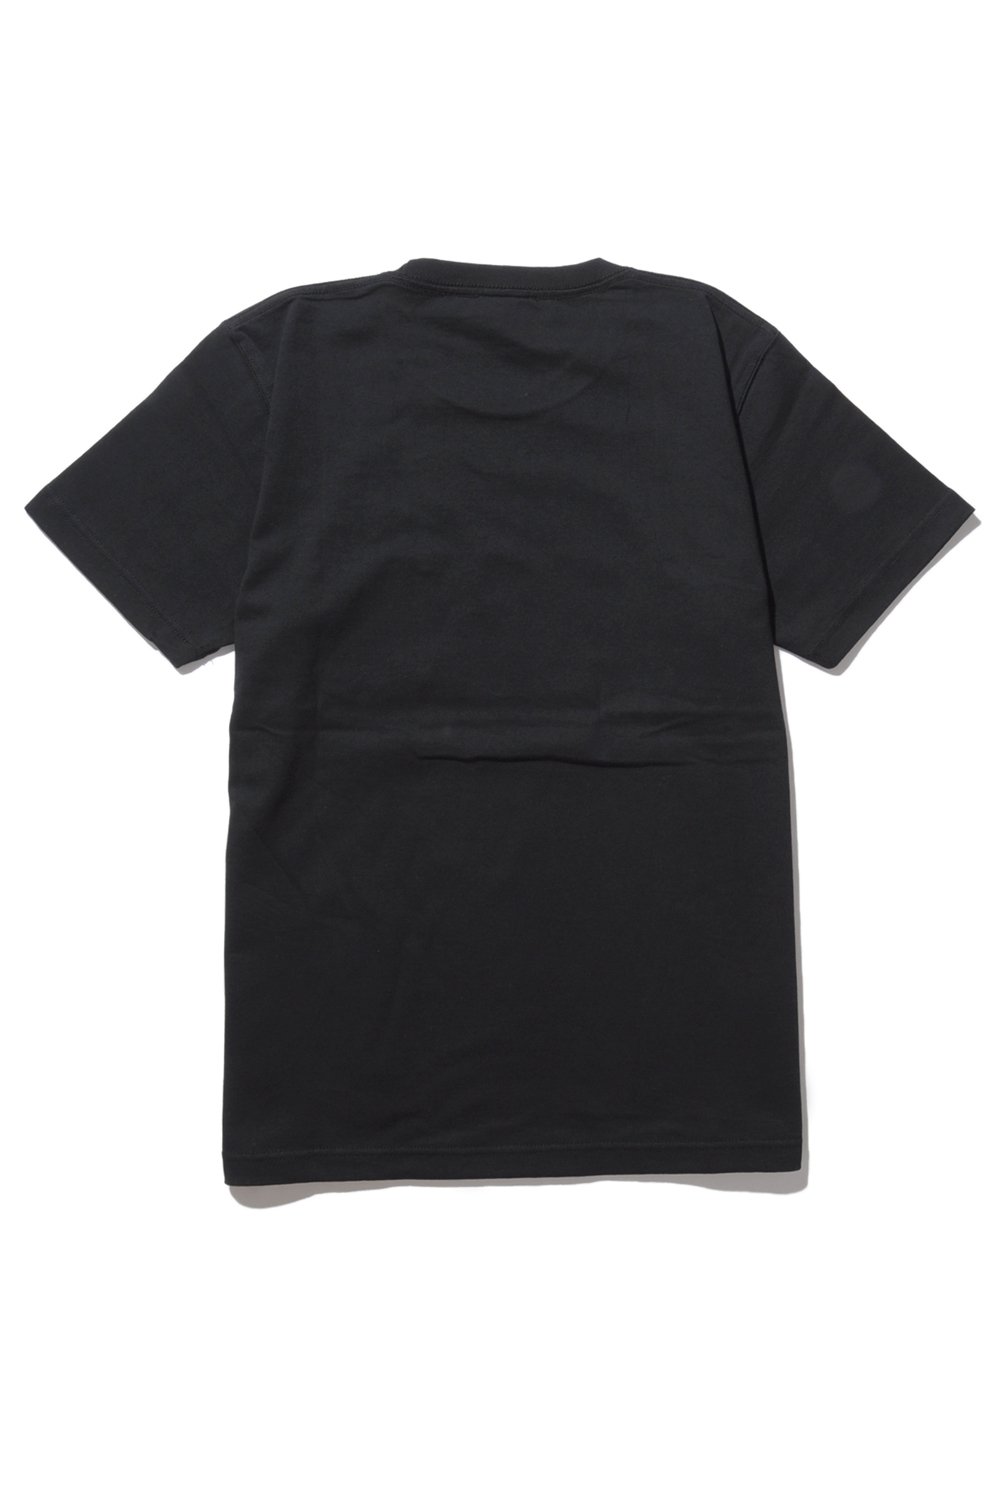 BLUCO(ブルコ) ポケットTシャツ SUPER HEAVY WEIGHT POCKET TEE’ S -OIL- OL-804-018  通販正規取扱 | ハーレムストア